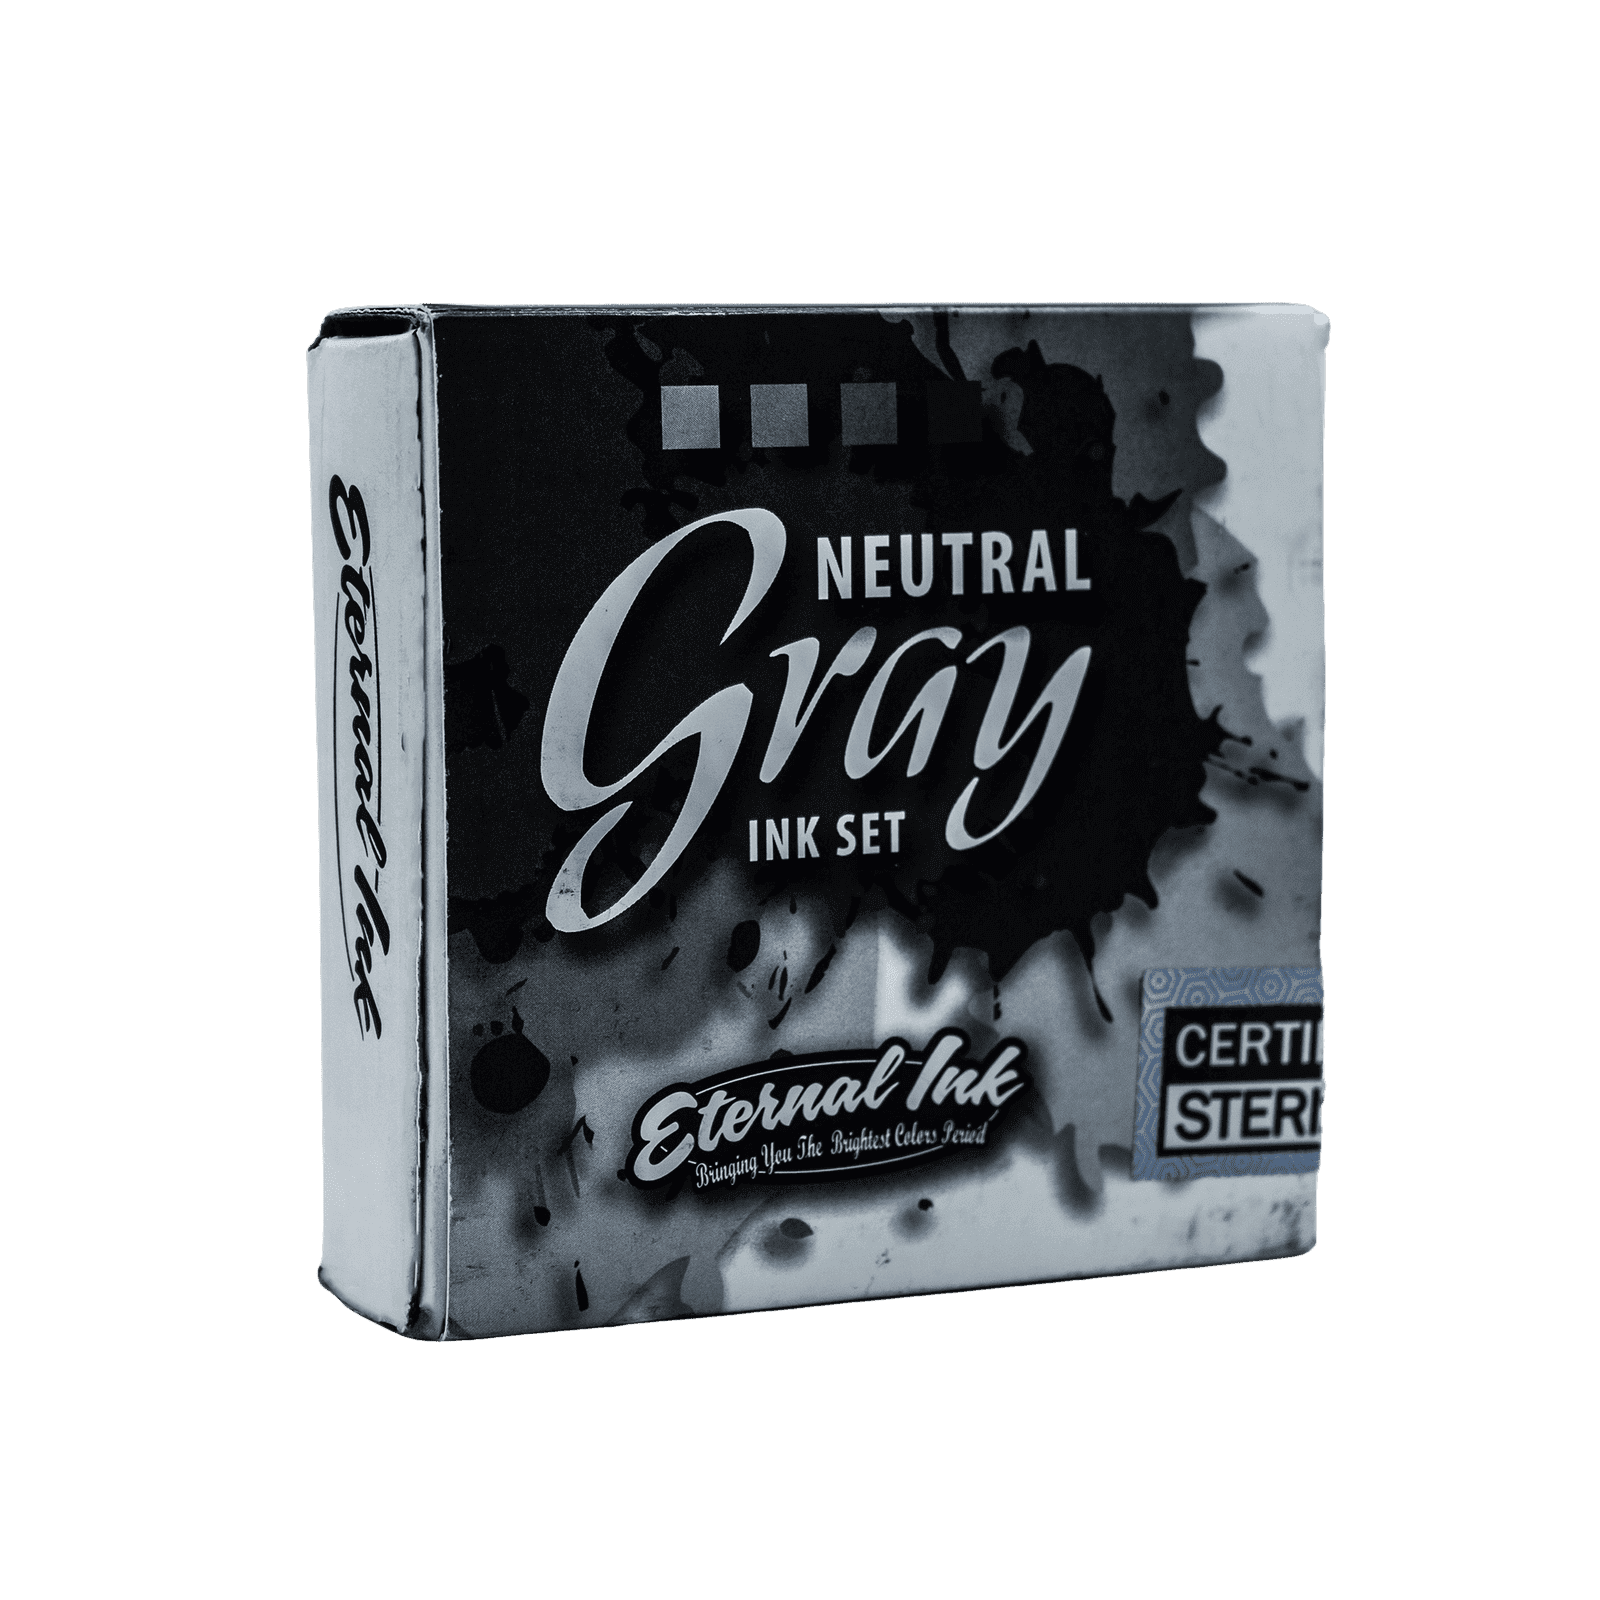 NEUTRAL GRAY INK SET- Eternal ink